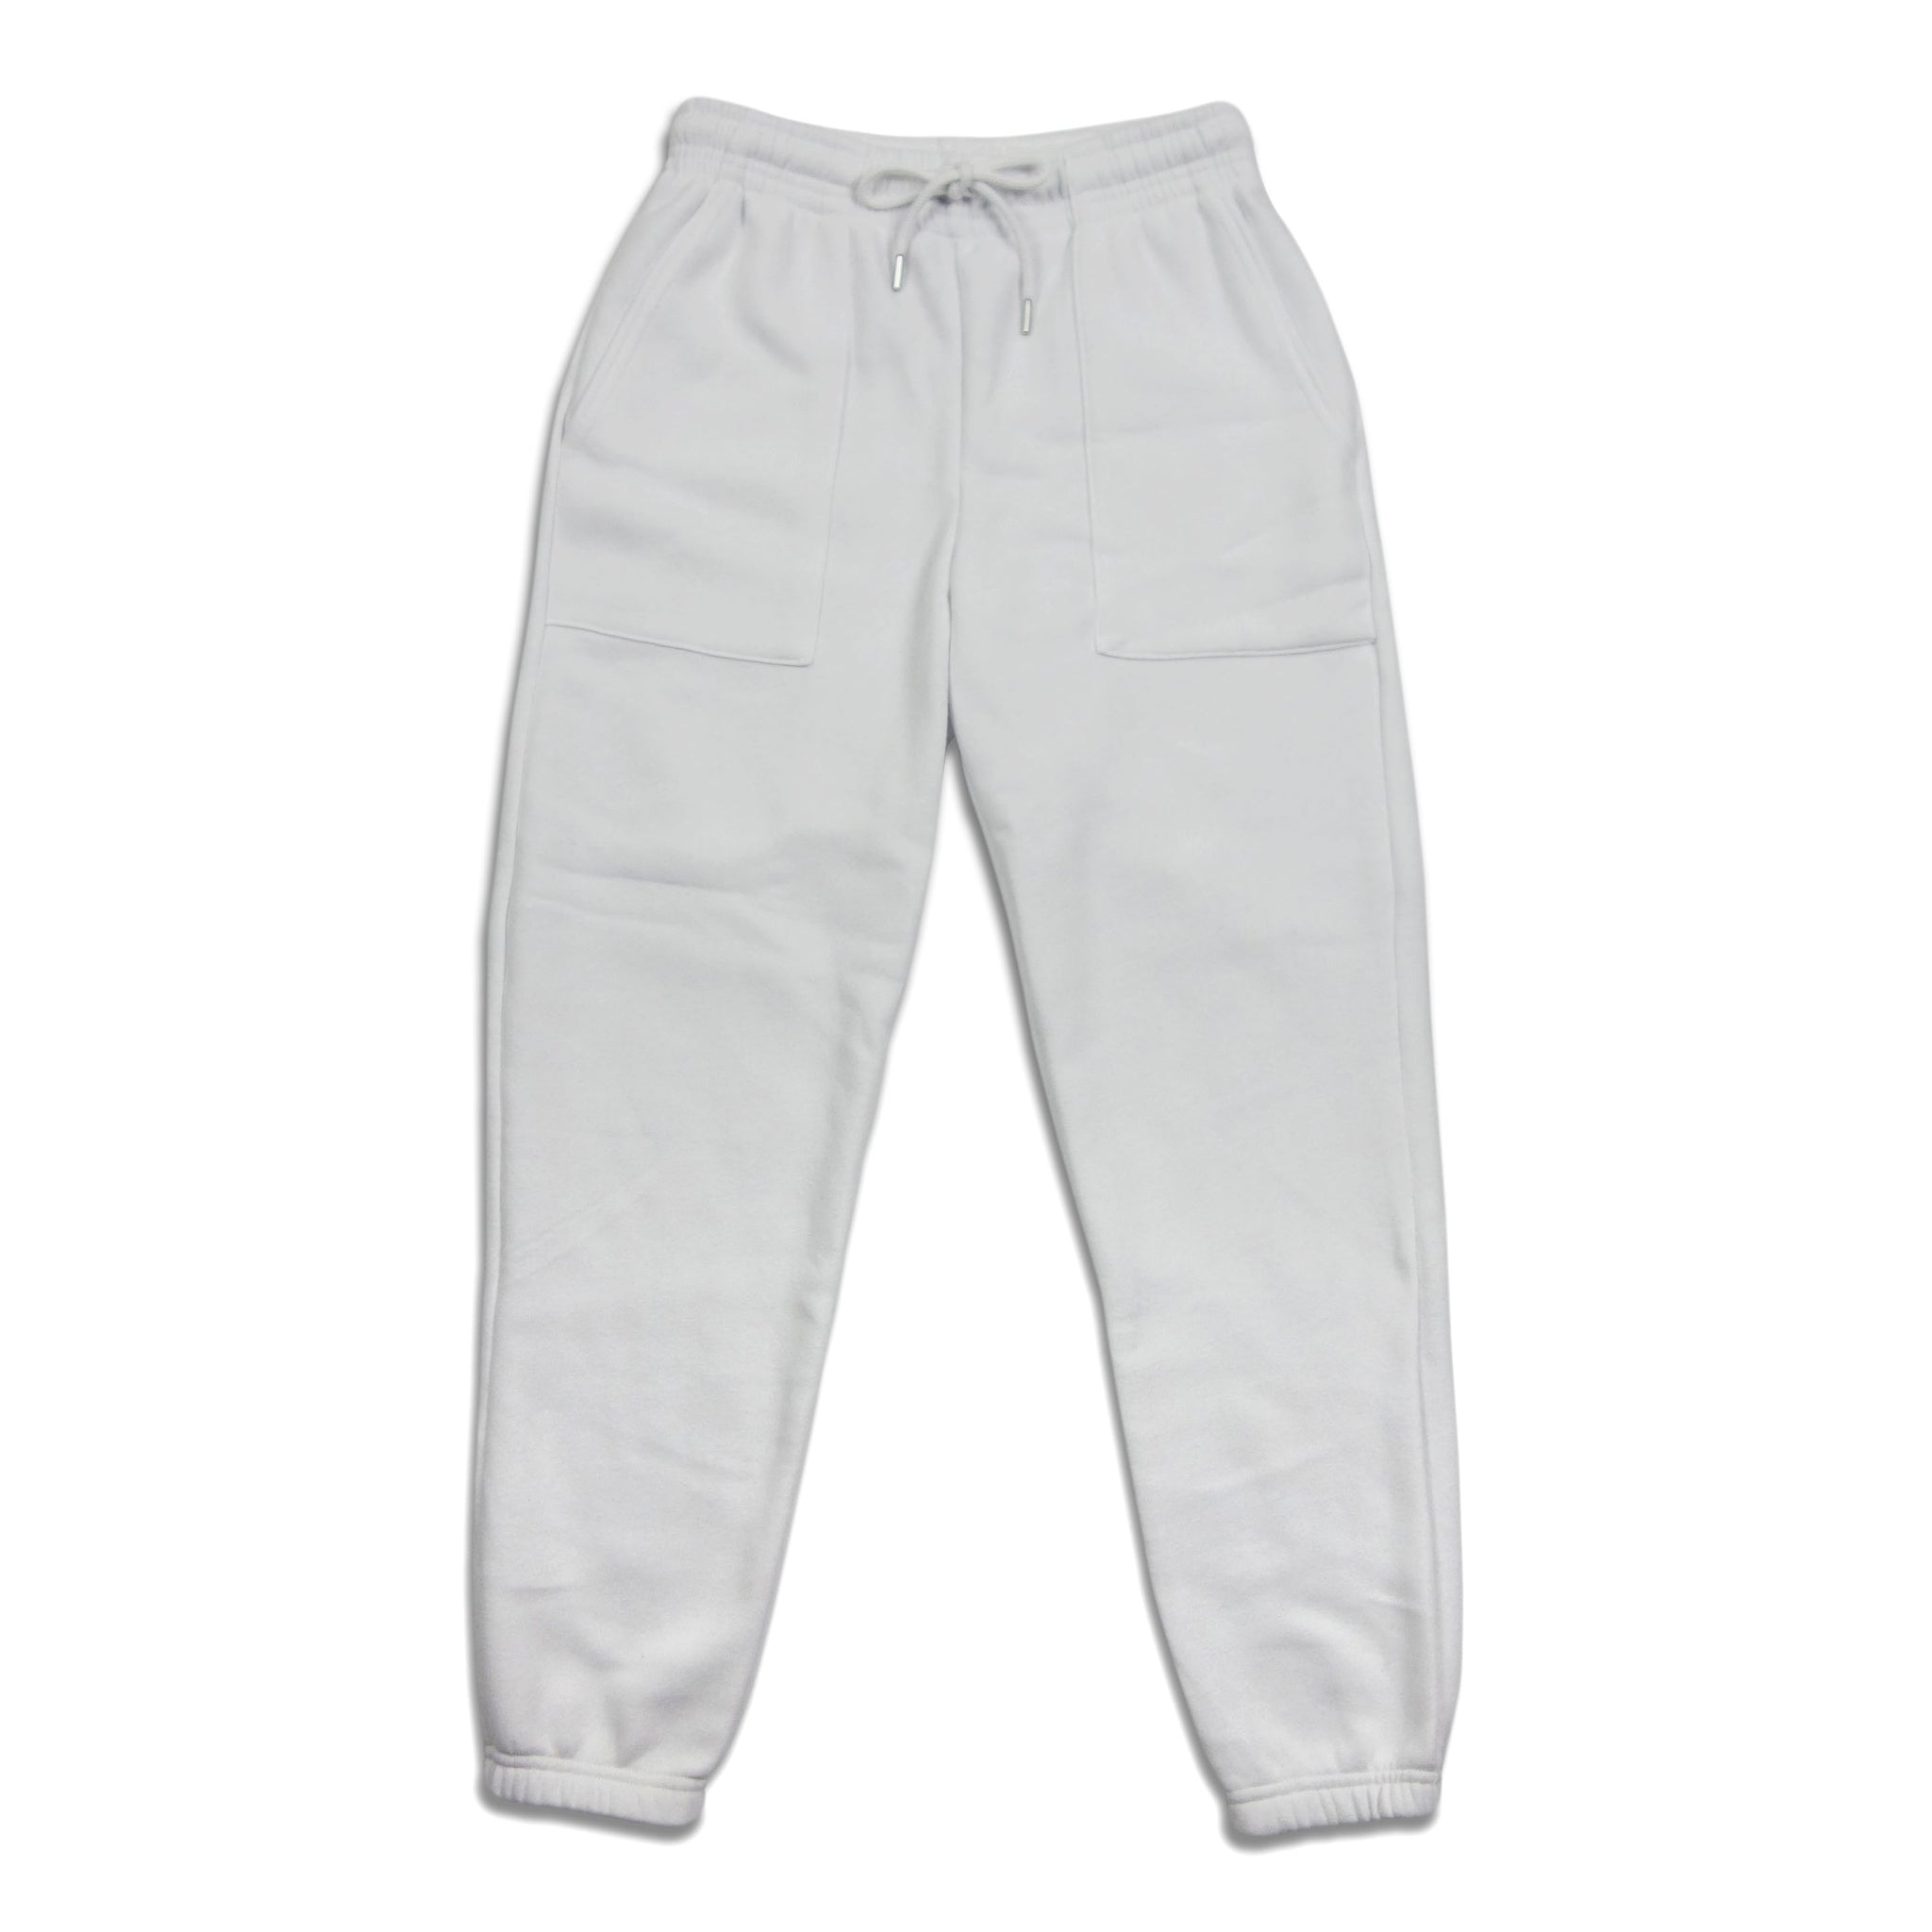 Tri-Blend Sweatpants with Pockets Basics White